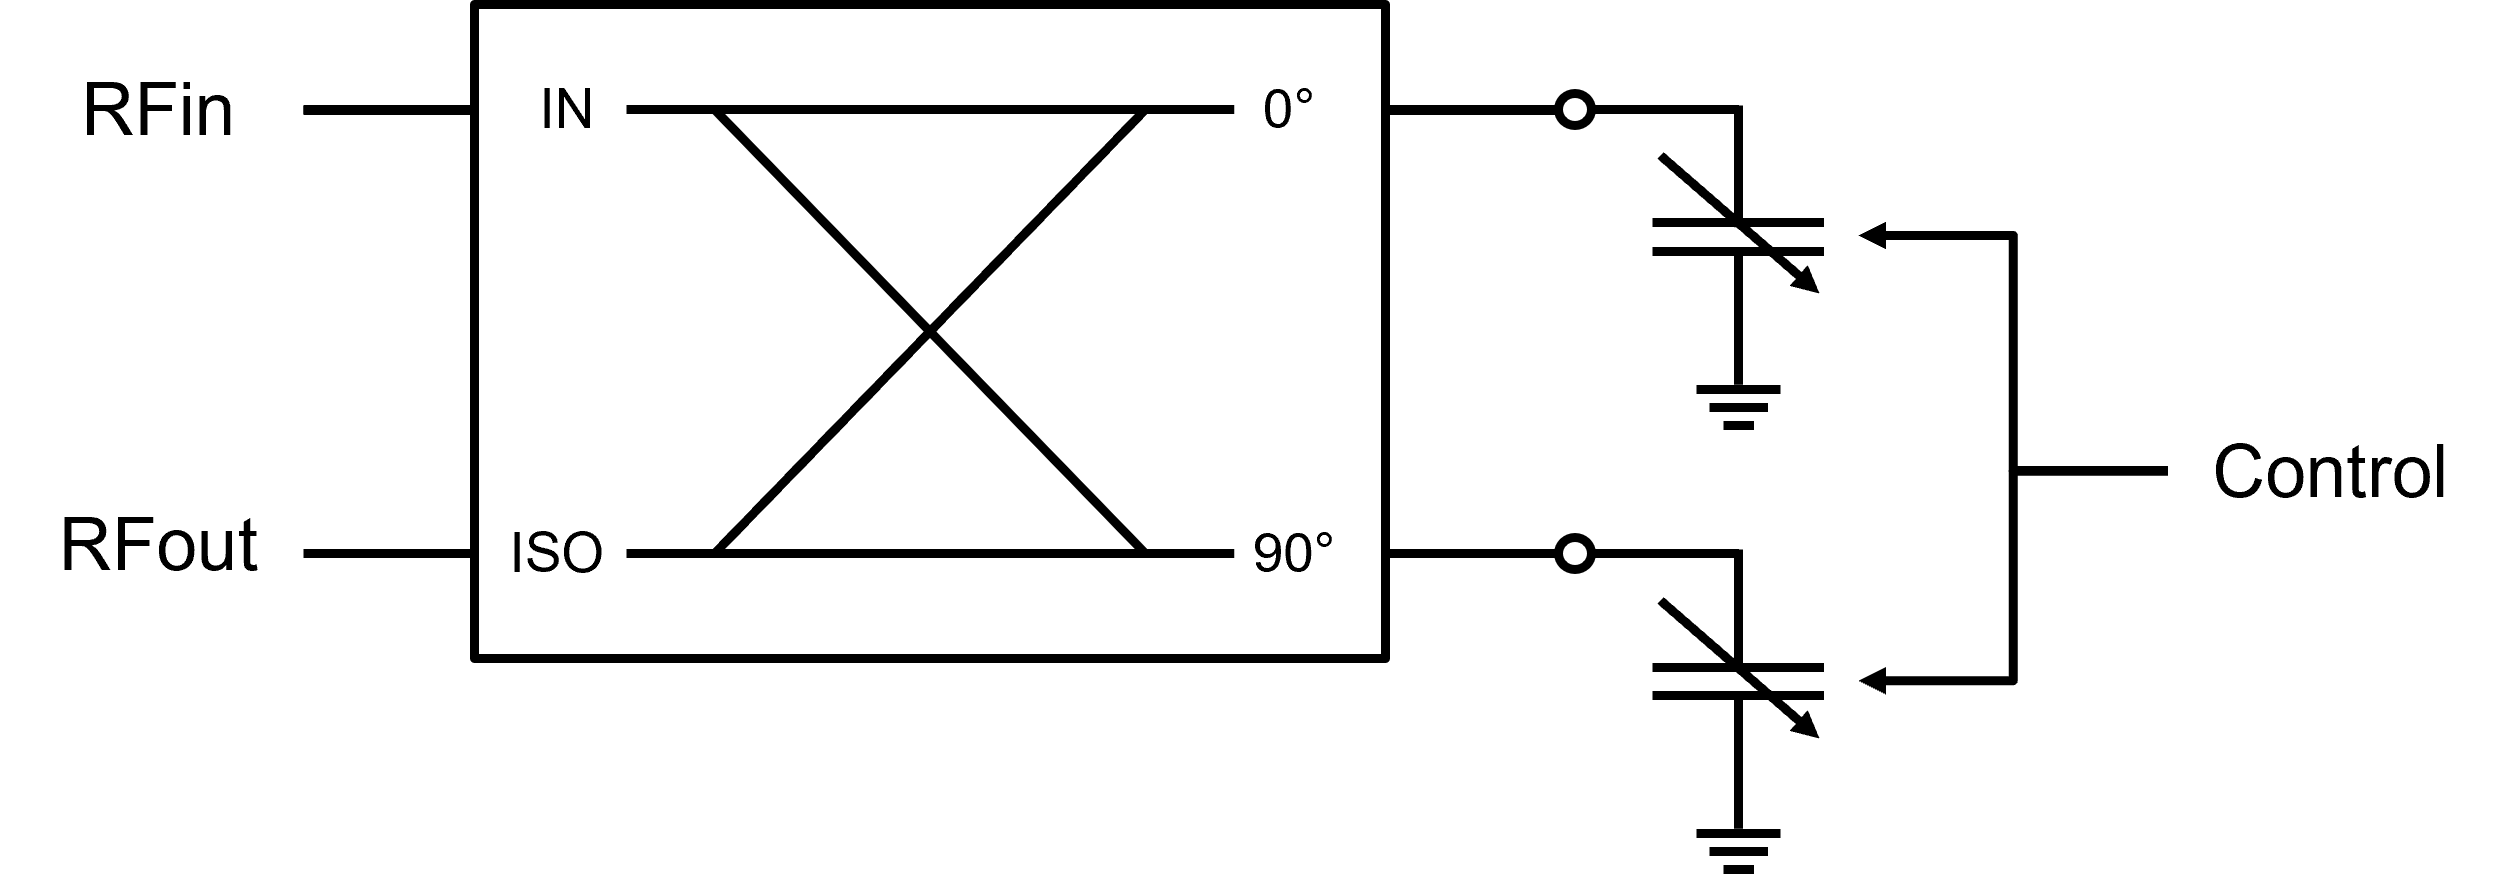 Reflection Phase Shifter Block Diagram